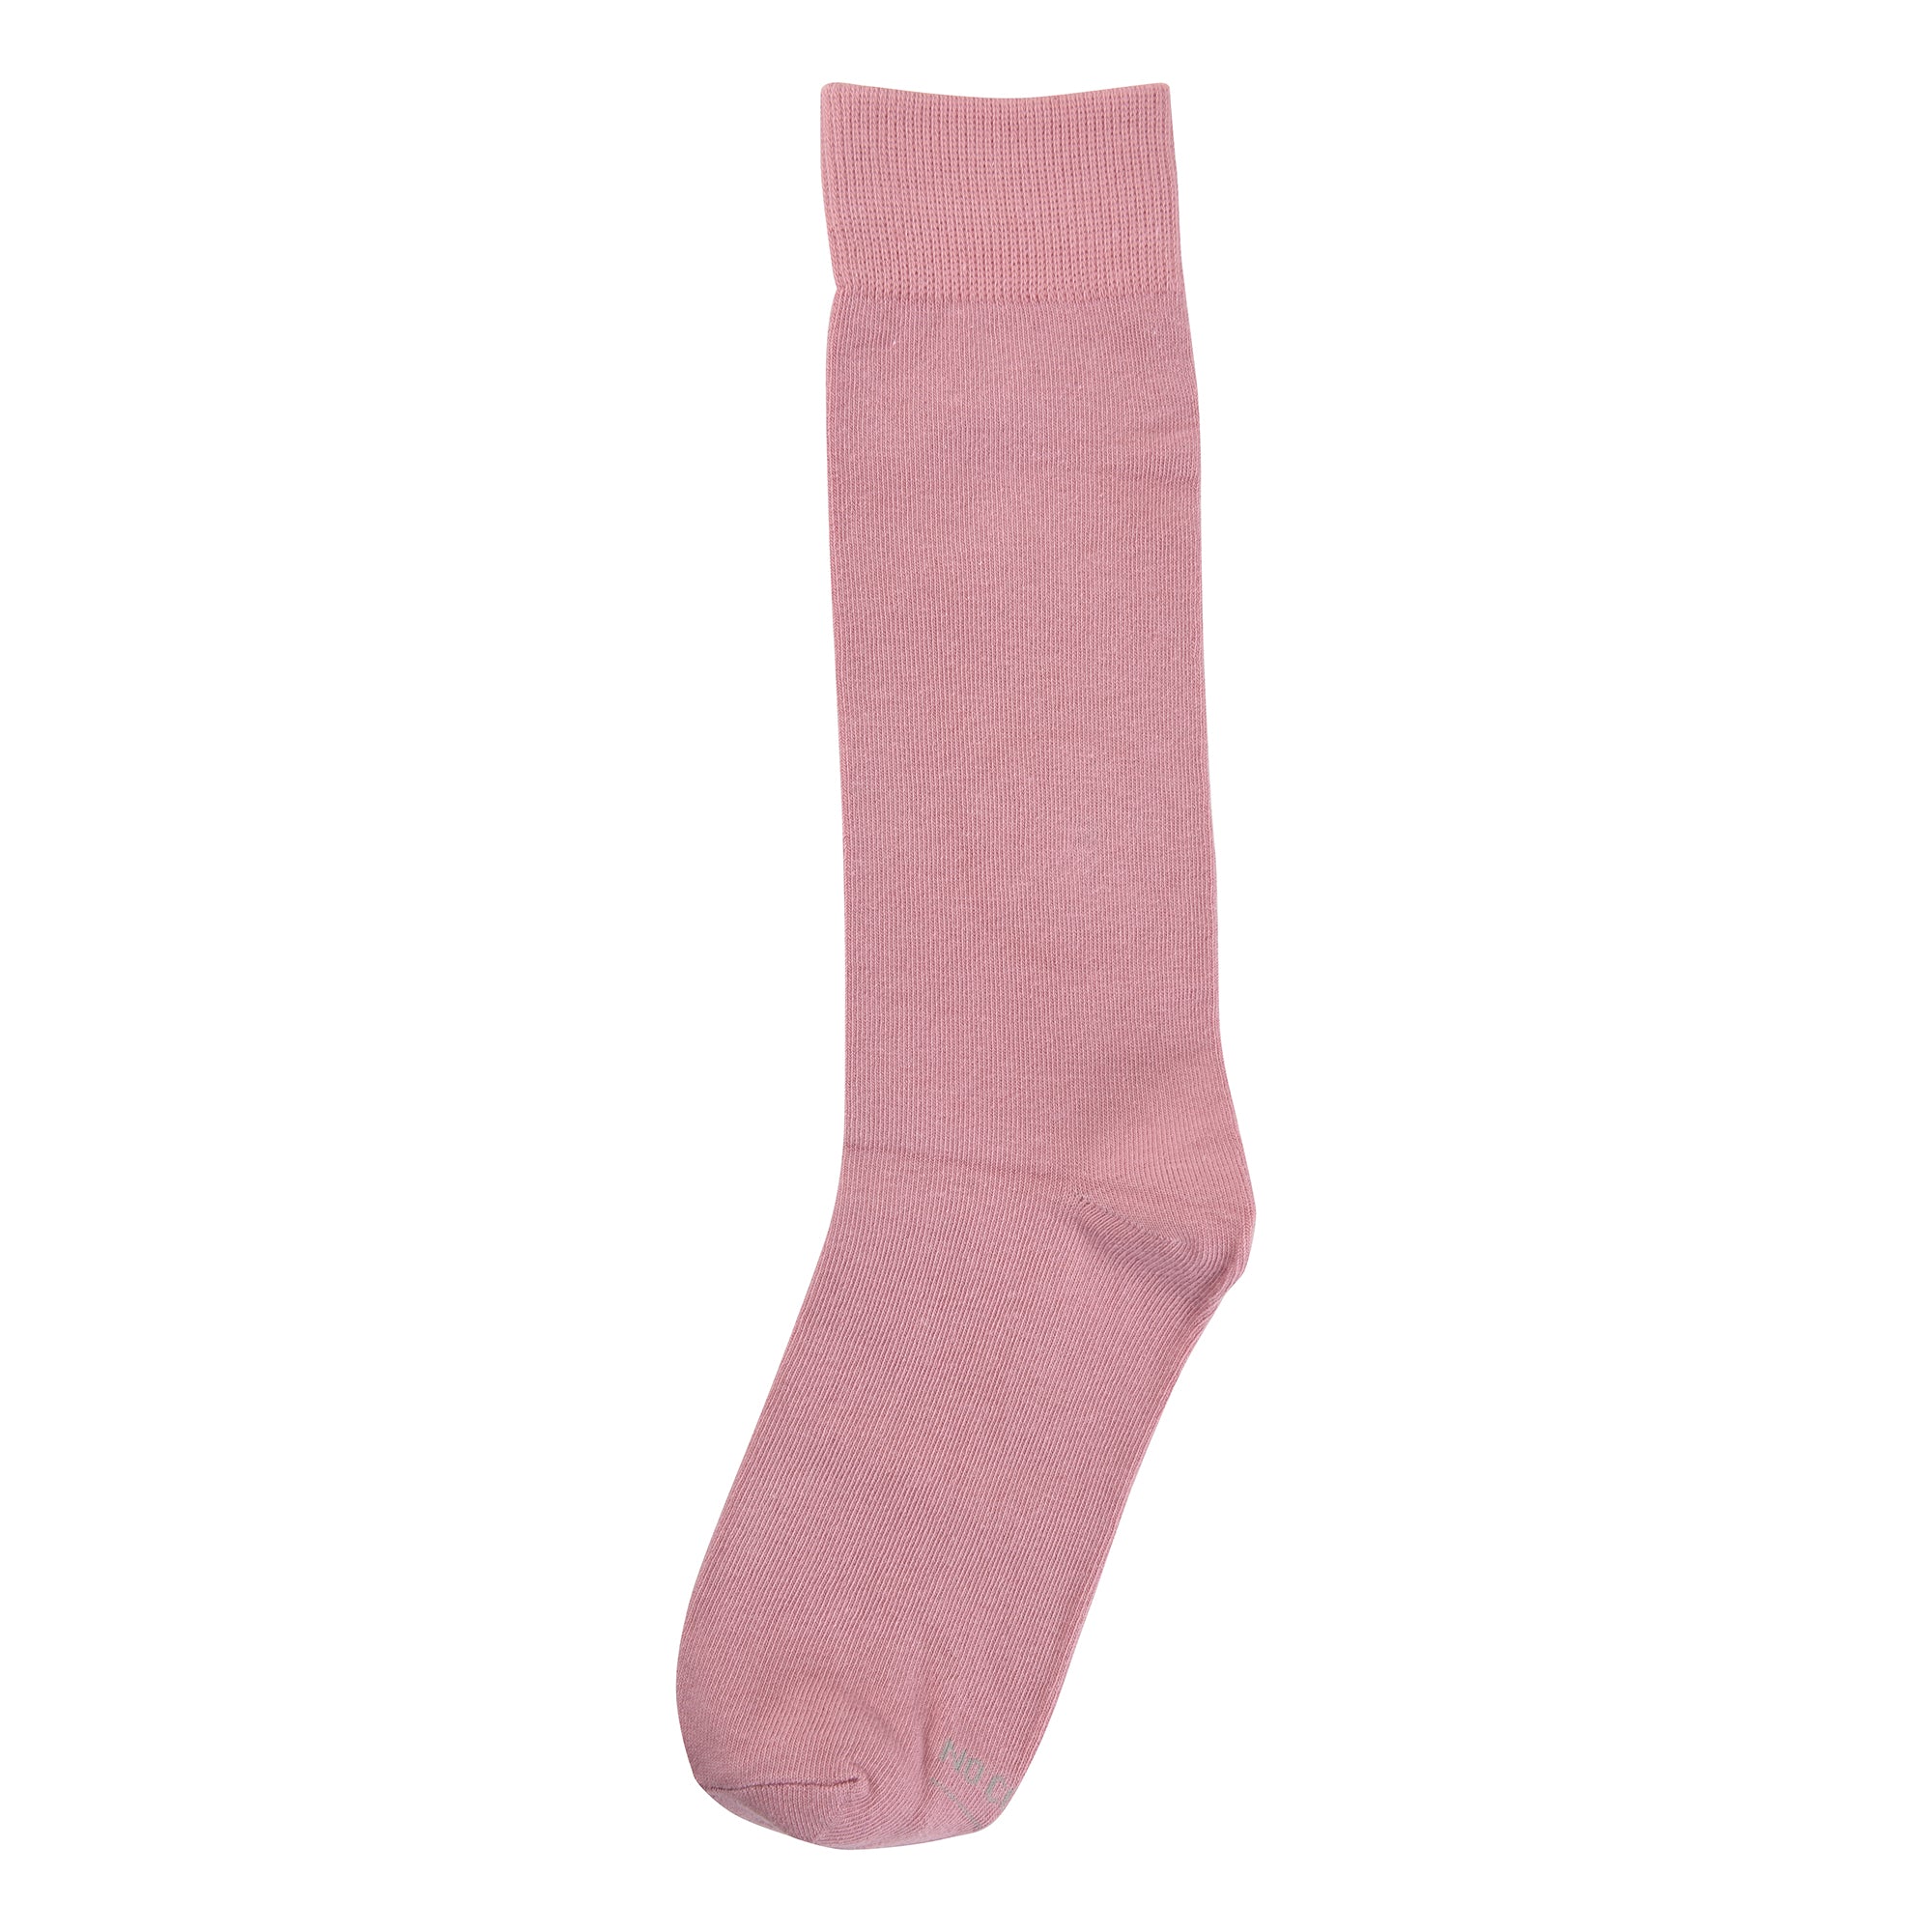 Solid Dusty Rose Socks